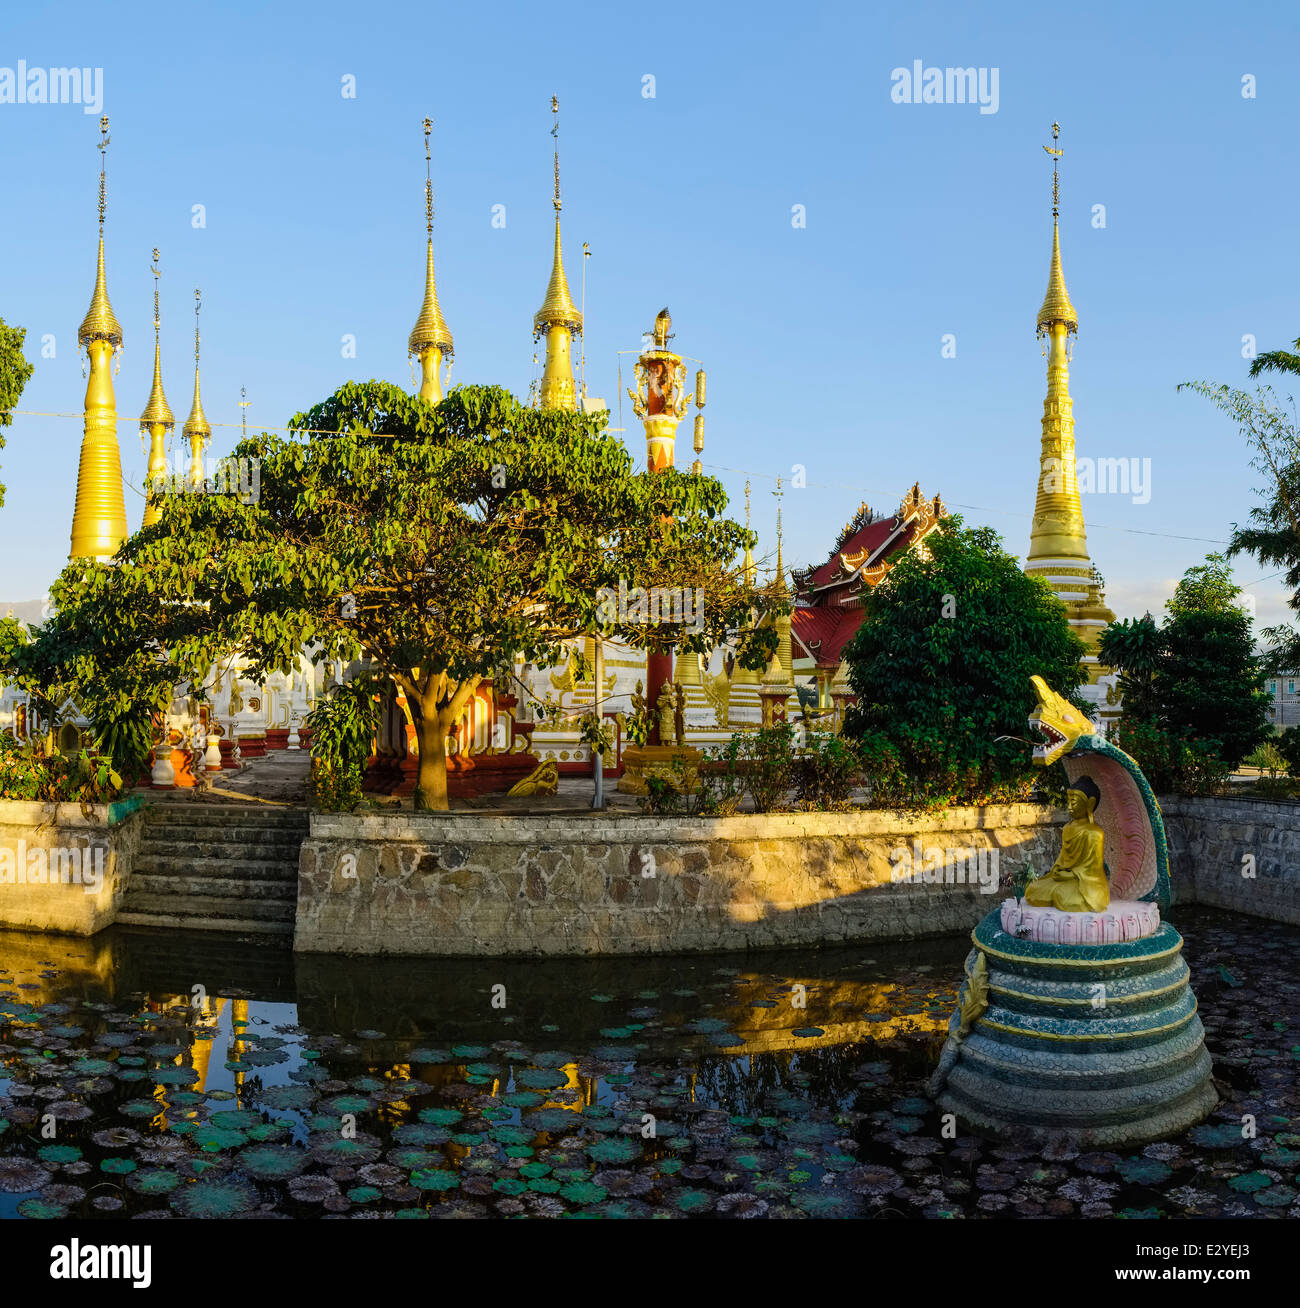 Pool with naga, Kyauk phyu gyi Pagoda, Nanthe, Myanmar, Asia Stock Photo